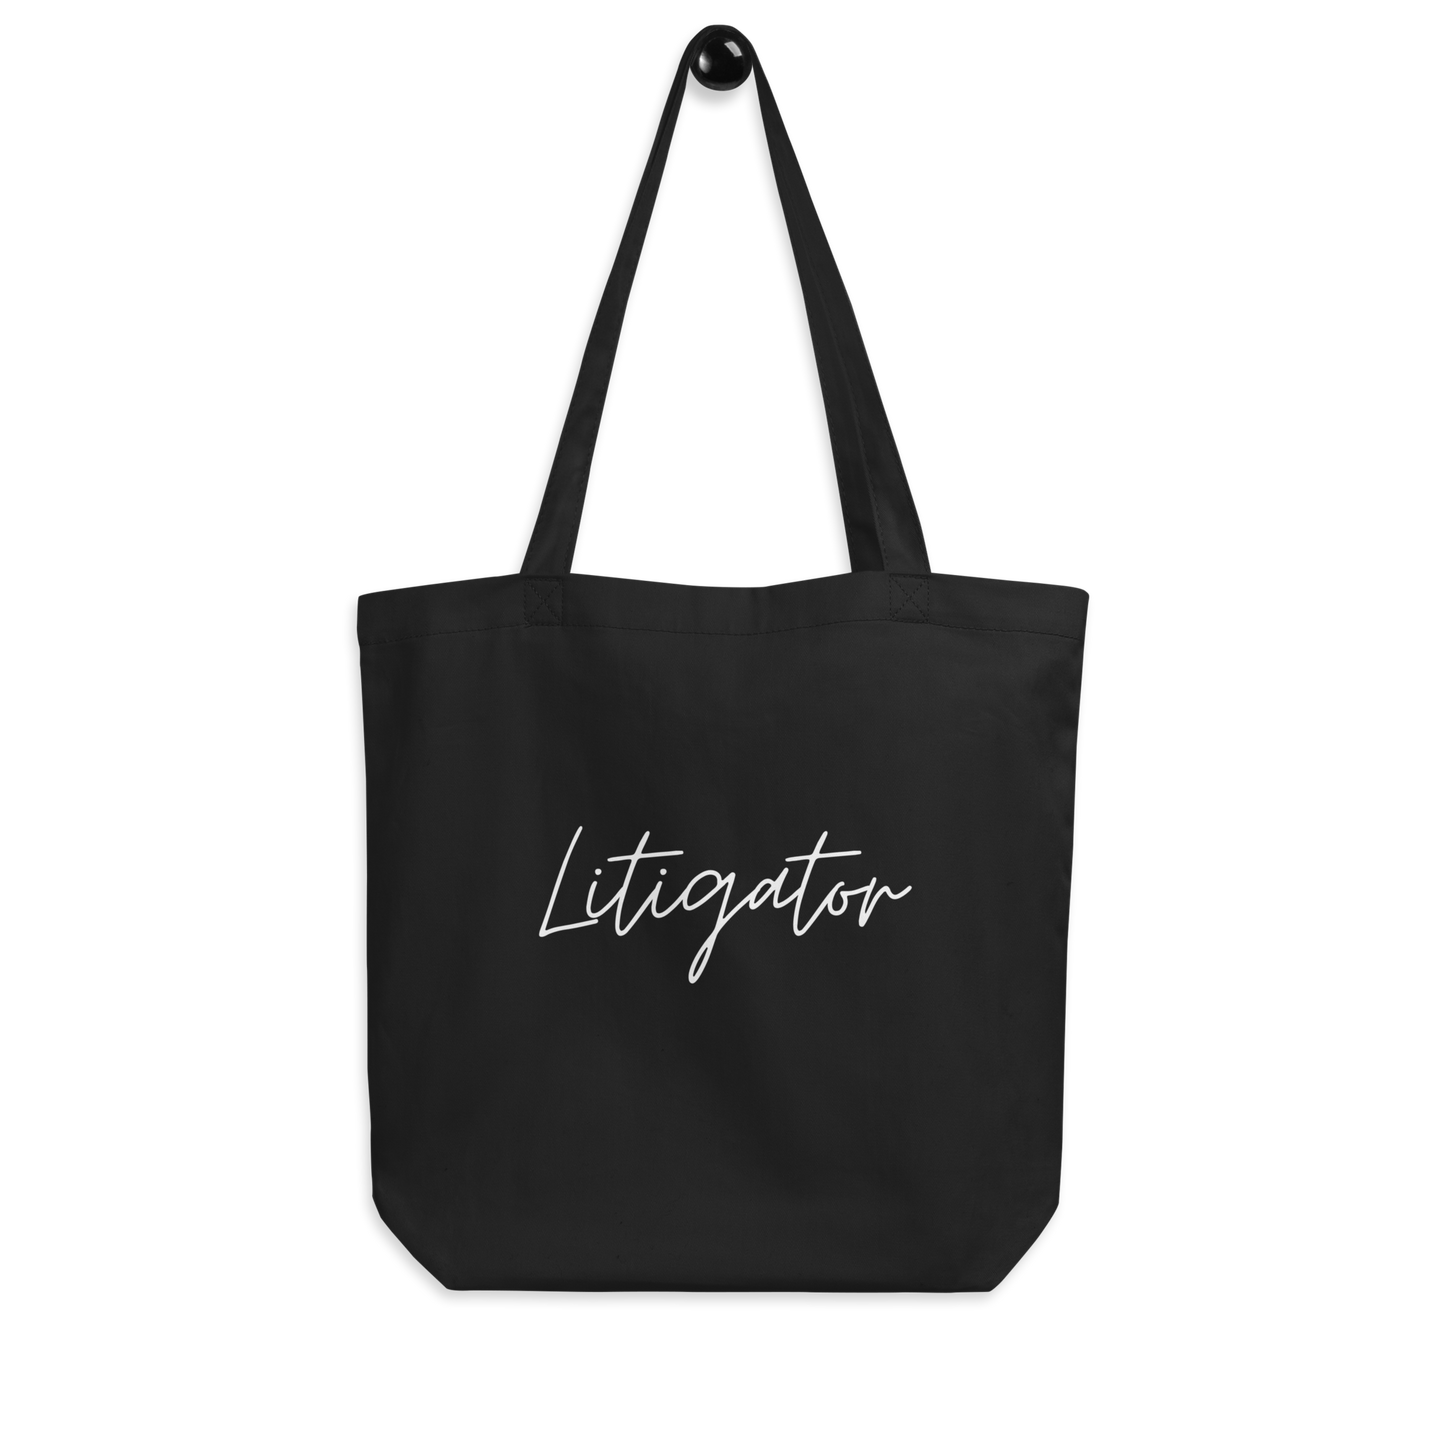 Litigator Tote Bag